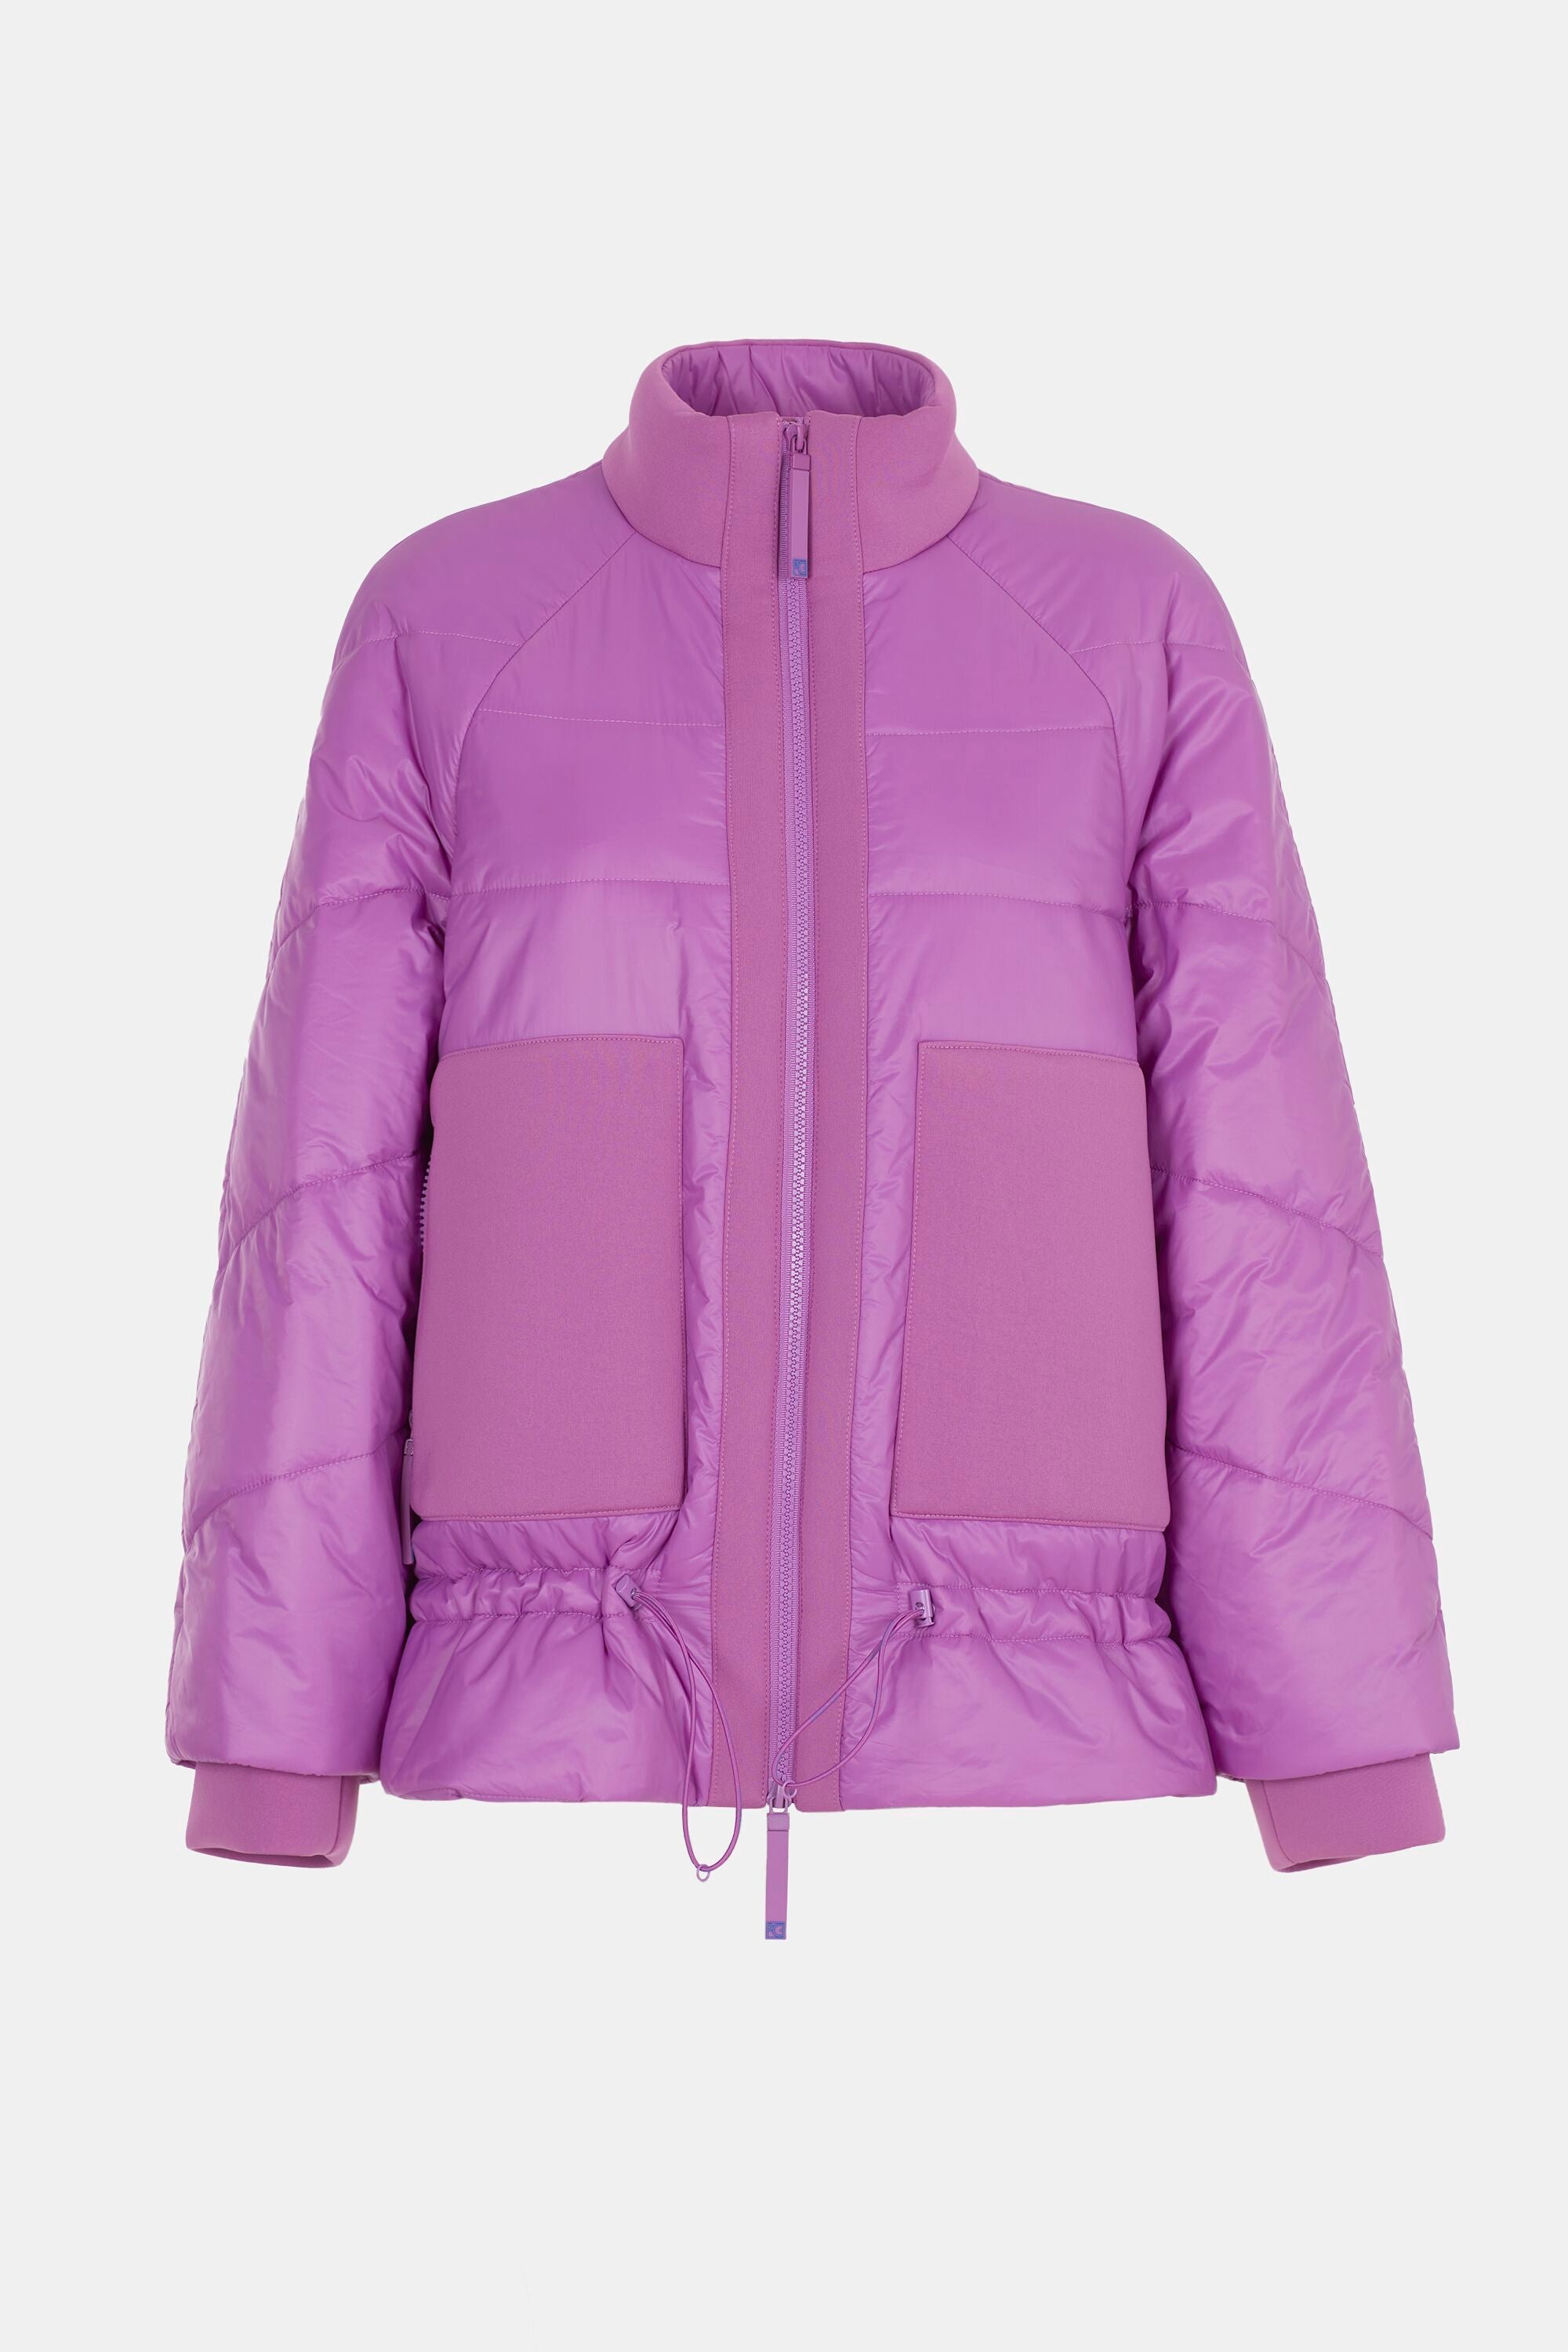 Cocoon neoprene and jacket - nylon pink Purificacion Belgium Garcia